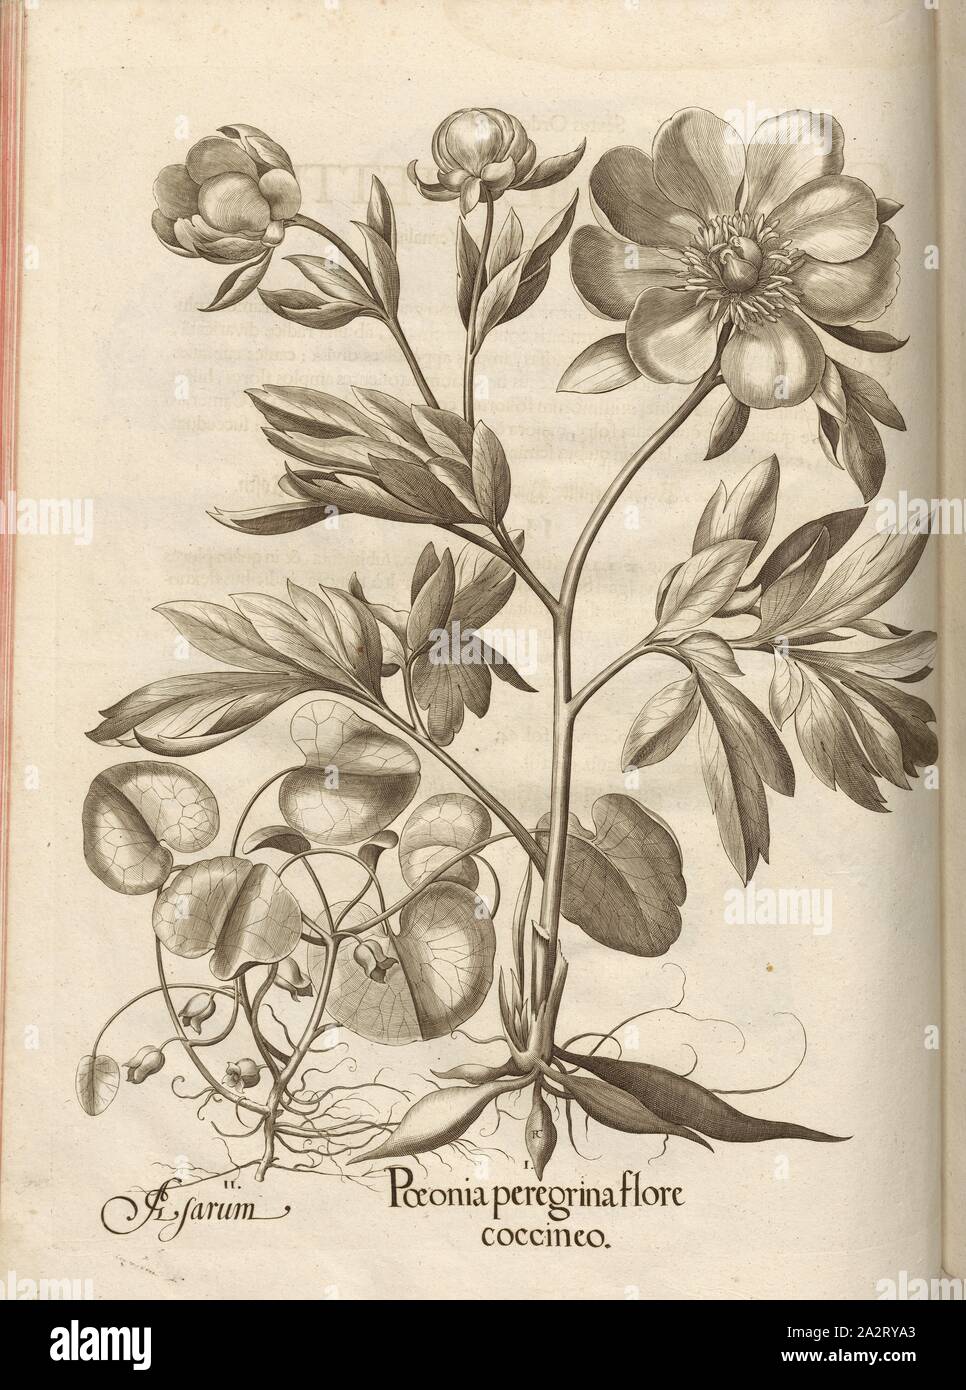 Physarum, Poeonia peregrina coccineo flower, limo-fungo, incisione su rame, p. 226, Besler, Basilio; Jungermann, Ludwig, 1713, basilio Besler: Hortus Eystettensis (...). Nürnberg, 1713 Foto Stock